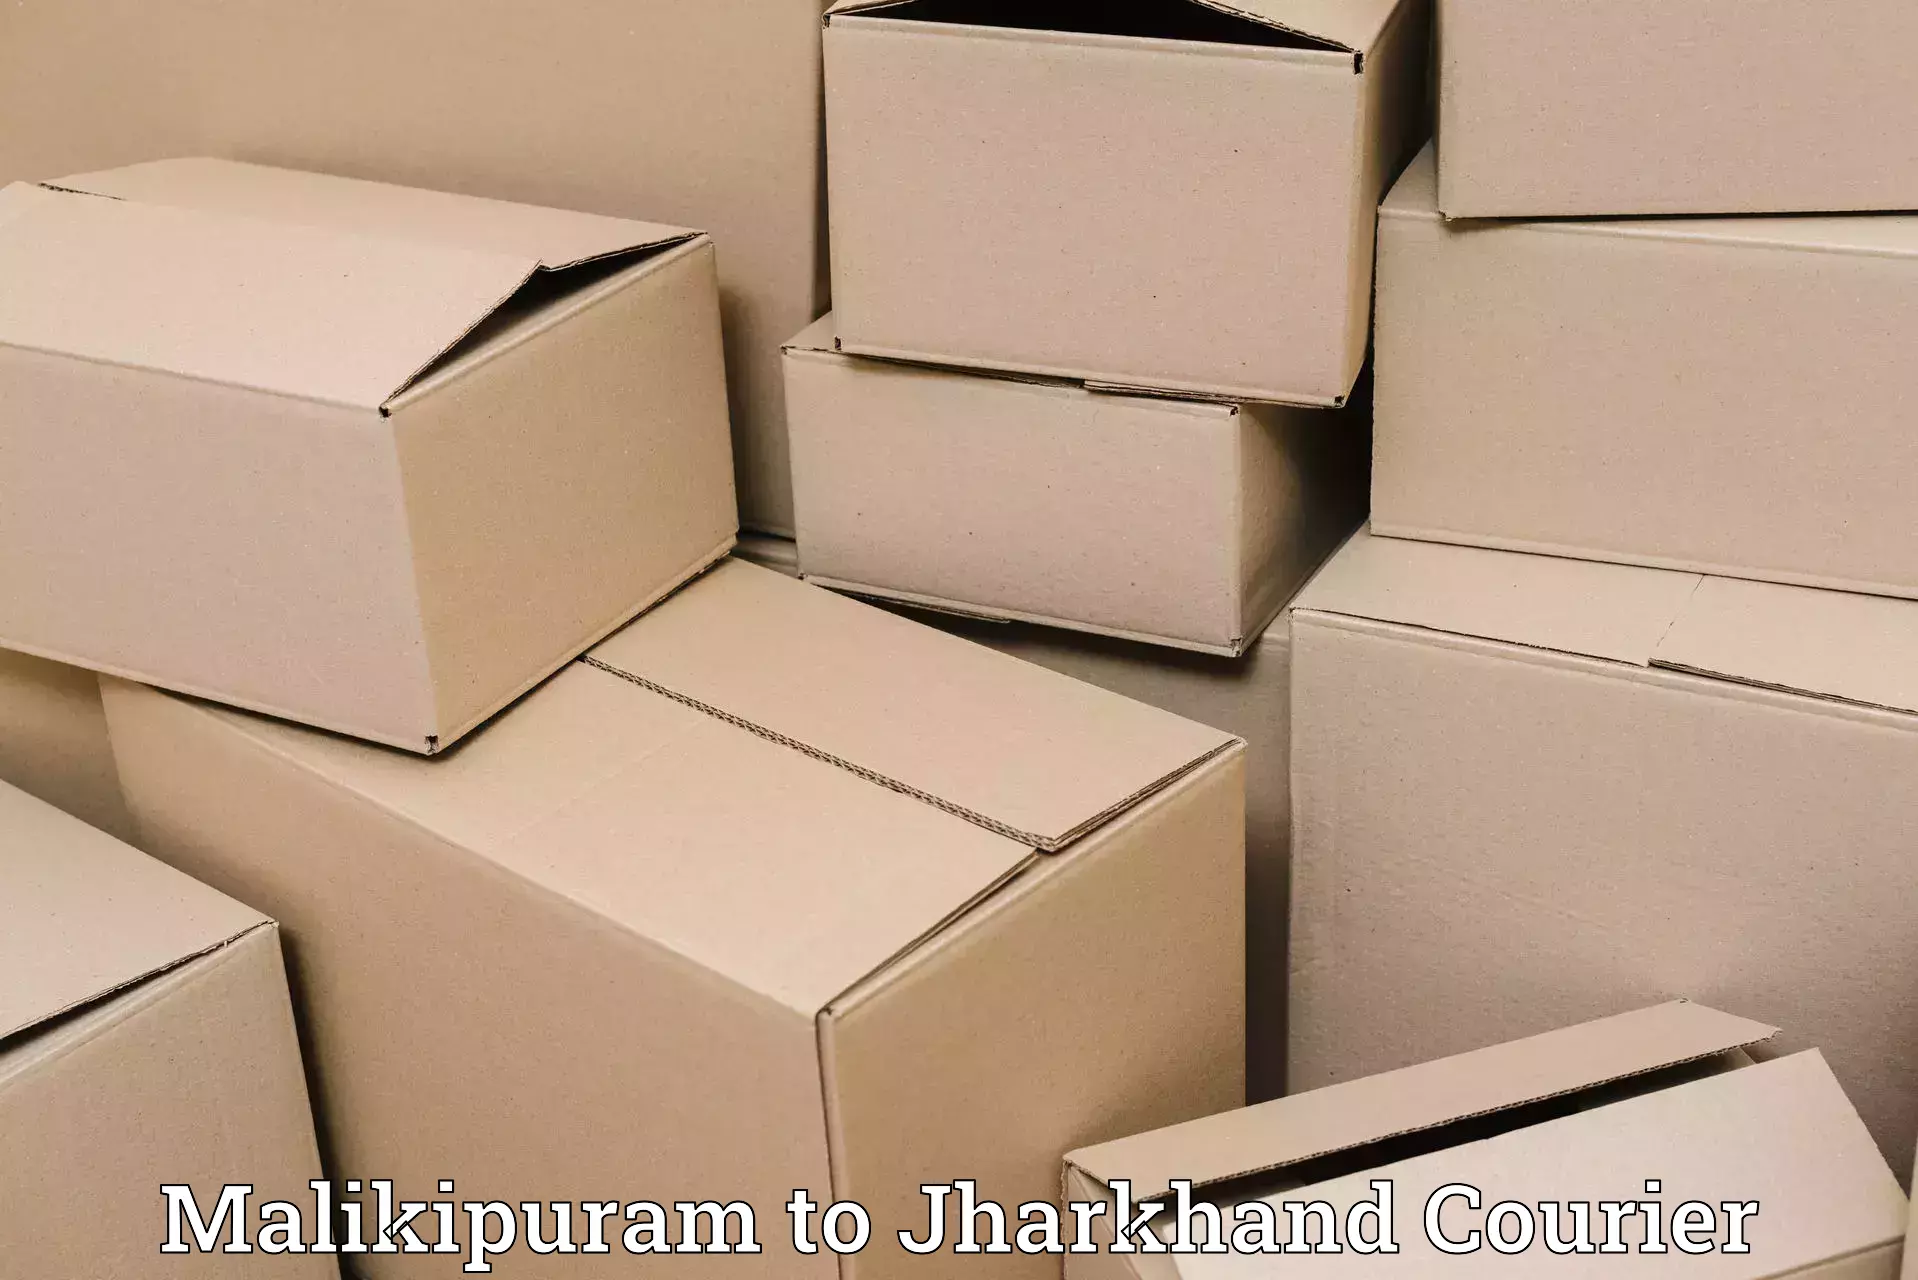 Logistics and distribution Malikipuram to Jharkhand